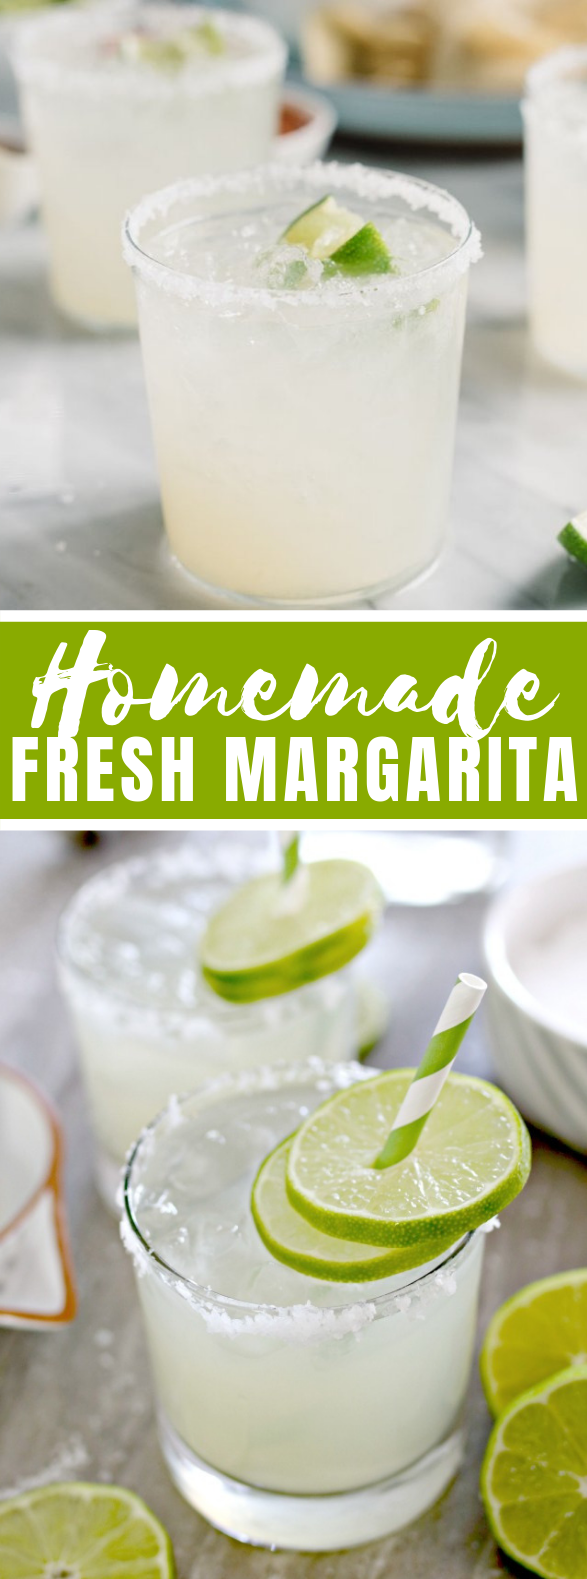 Homemade Fresh Margarita Recipe #drinks #cocktails